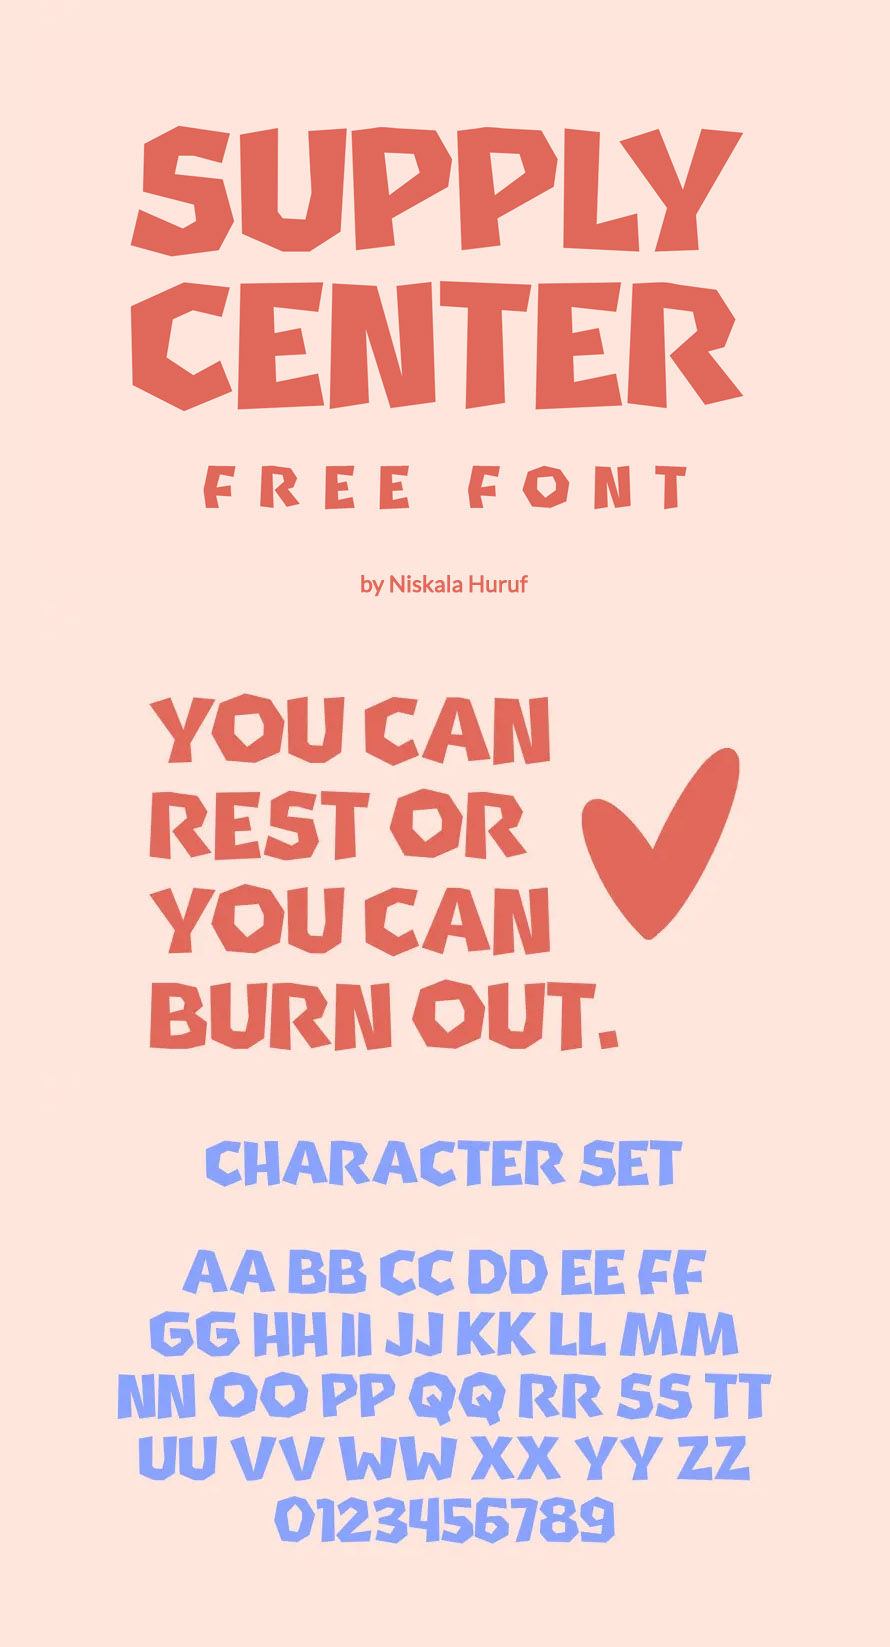 Supply Center Free Font